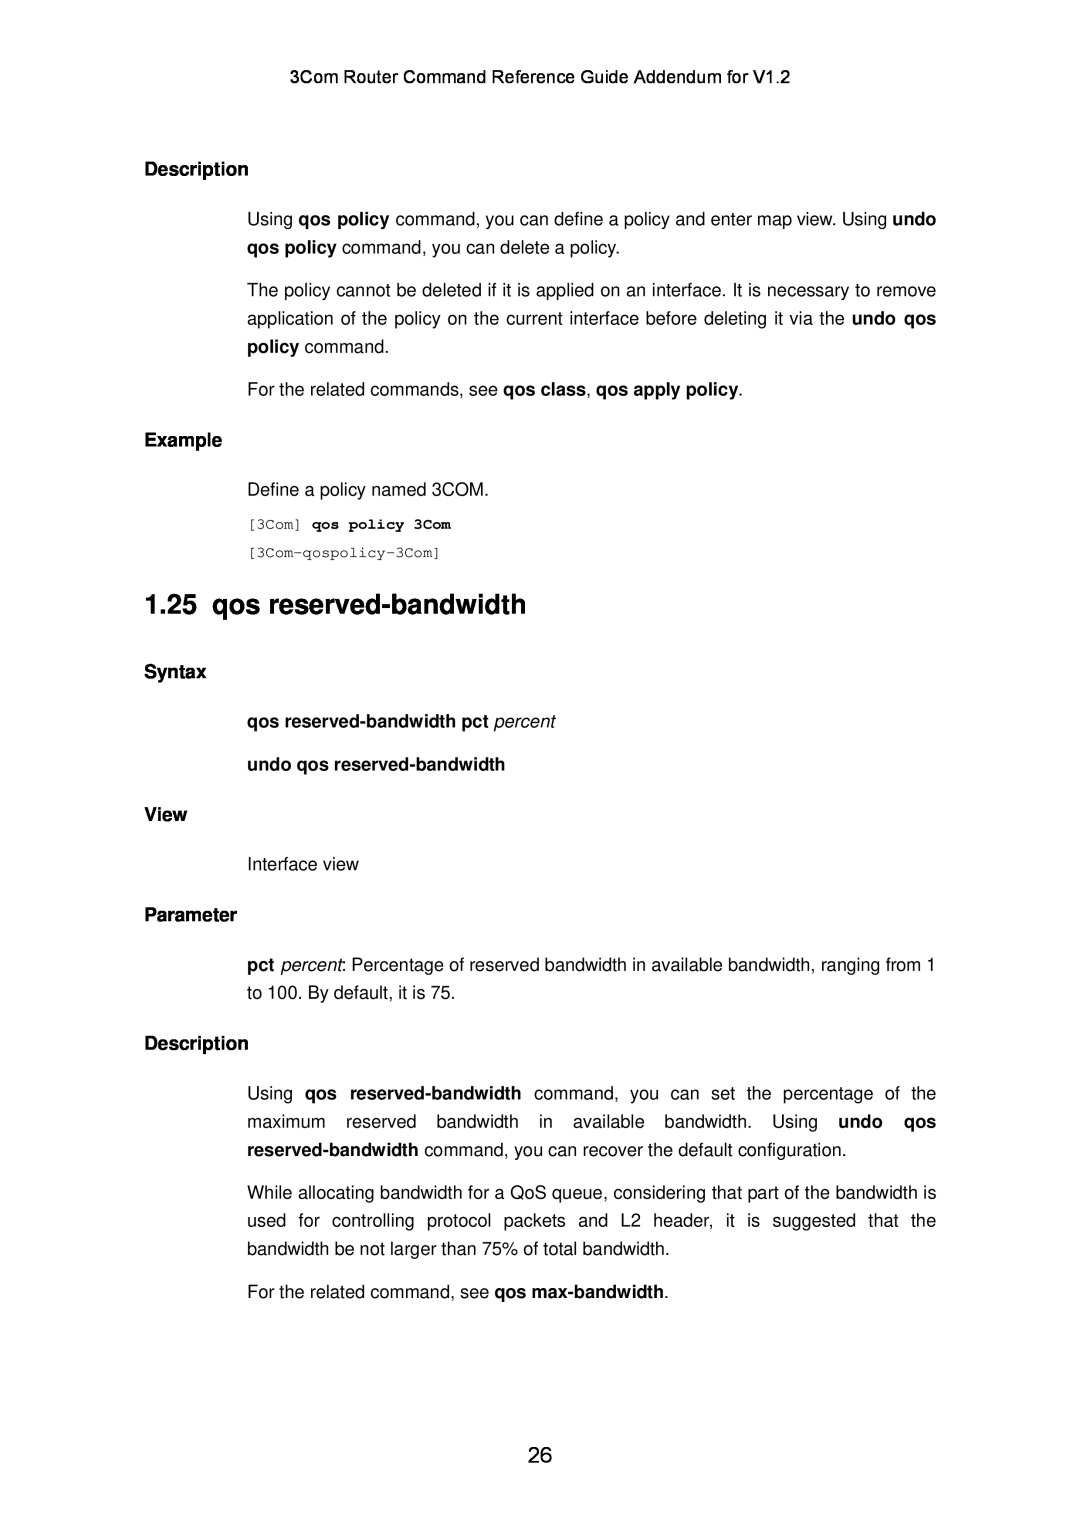 3Com 10014302 manual qos reserved-bandwidth, Description, Example, Syntax, View, Parameter 